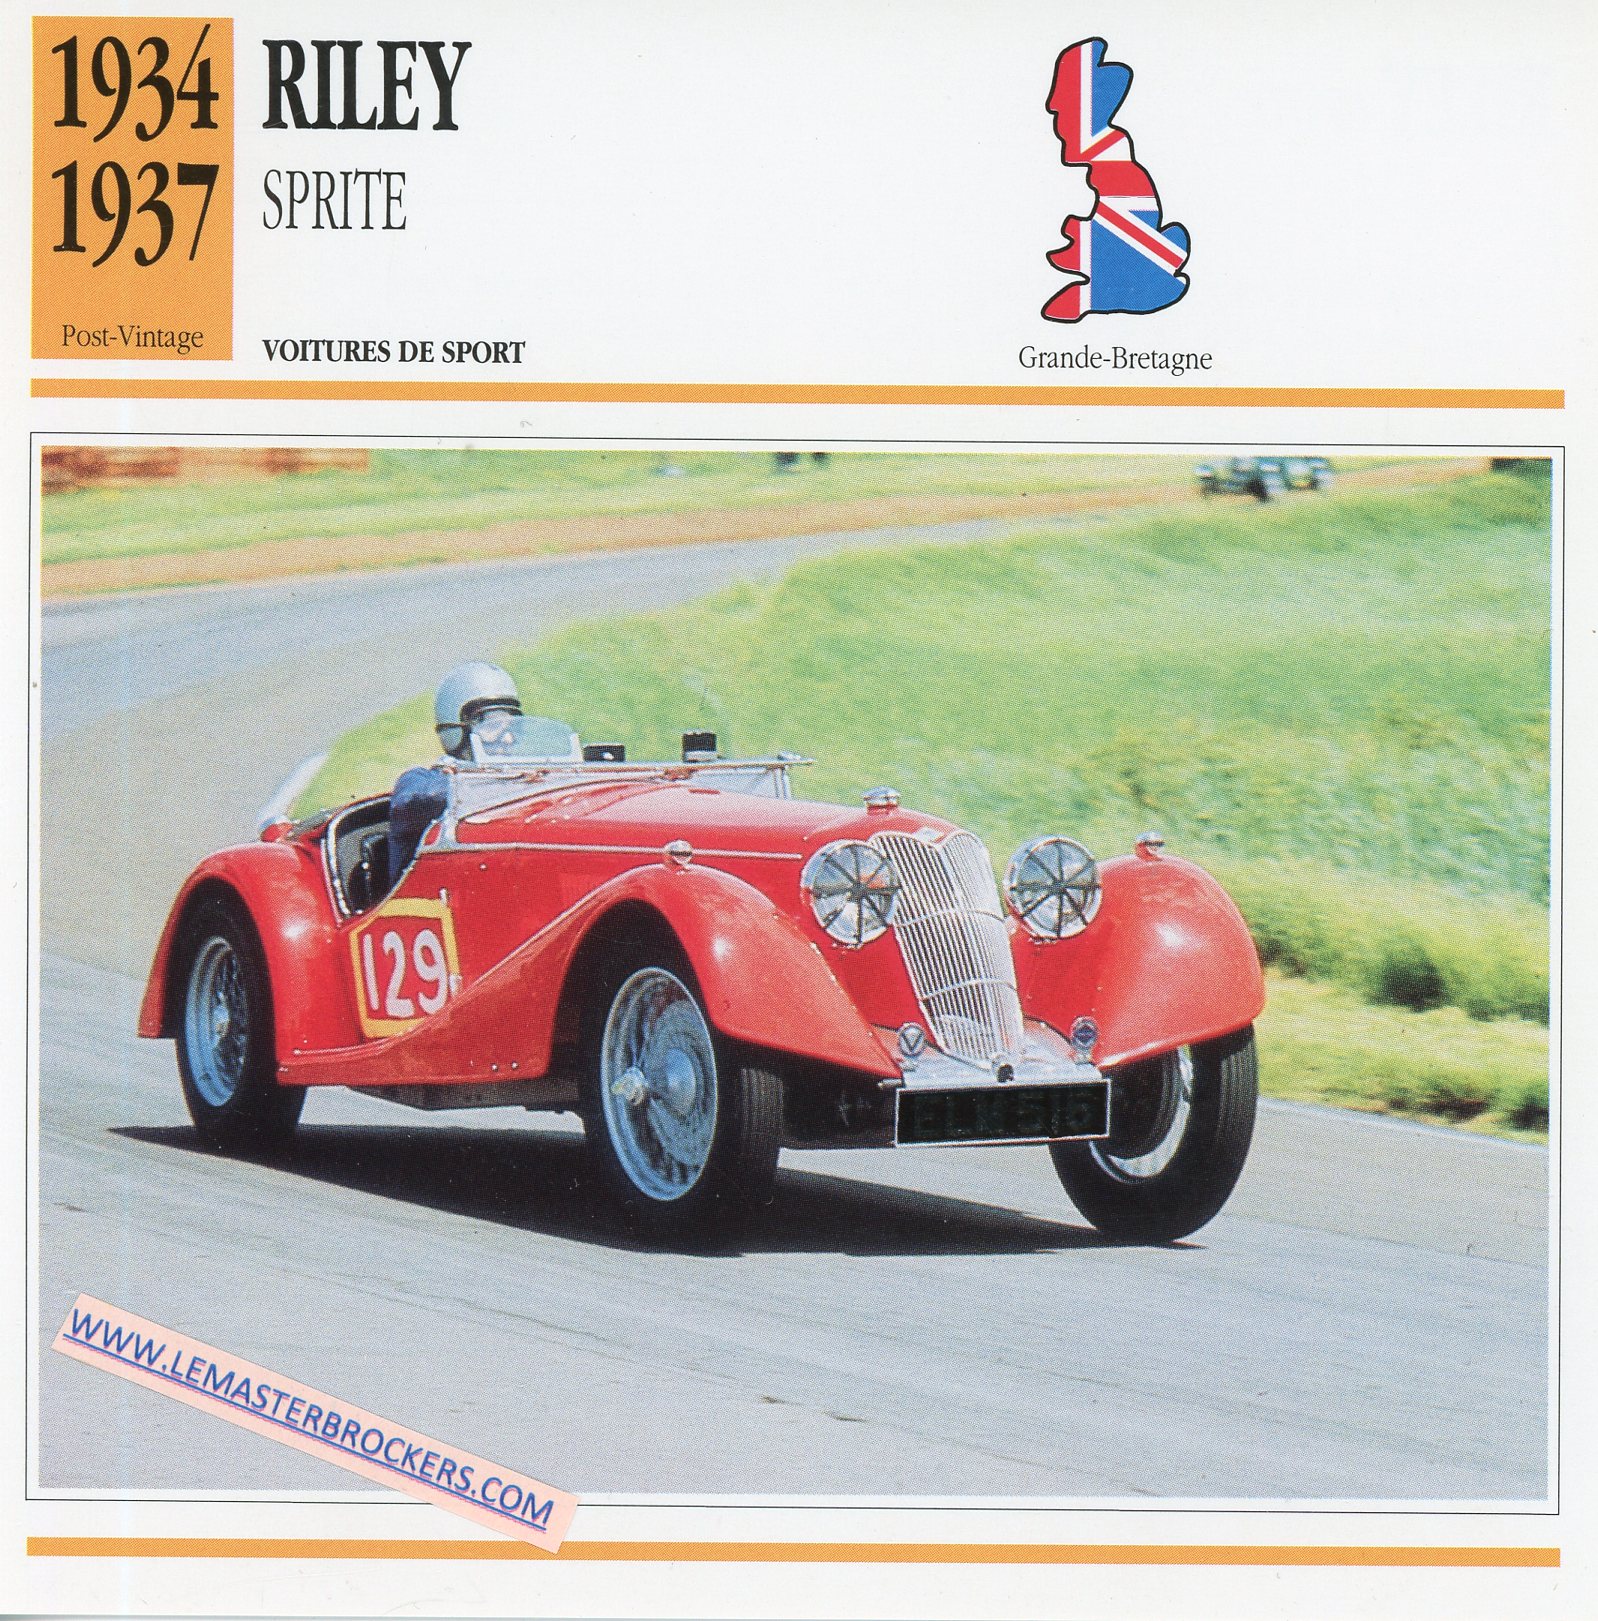 FICHE-AUTO-RILEY-SPRITE-1934-1937-LEMASTERBROCKERS